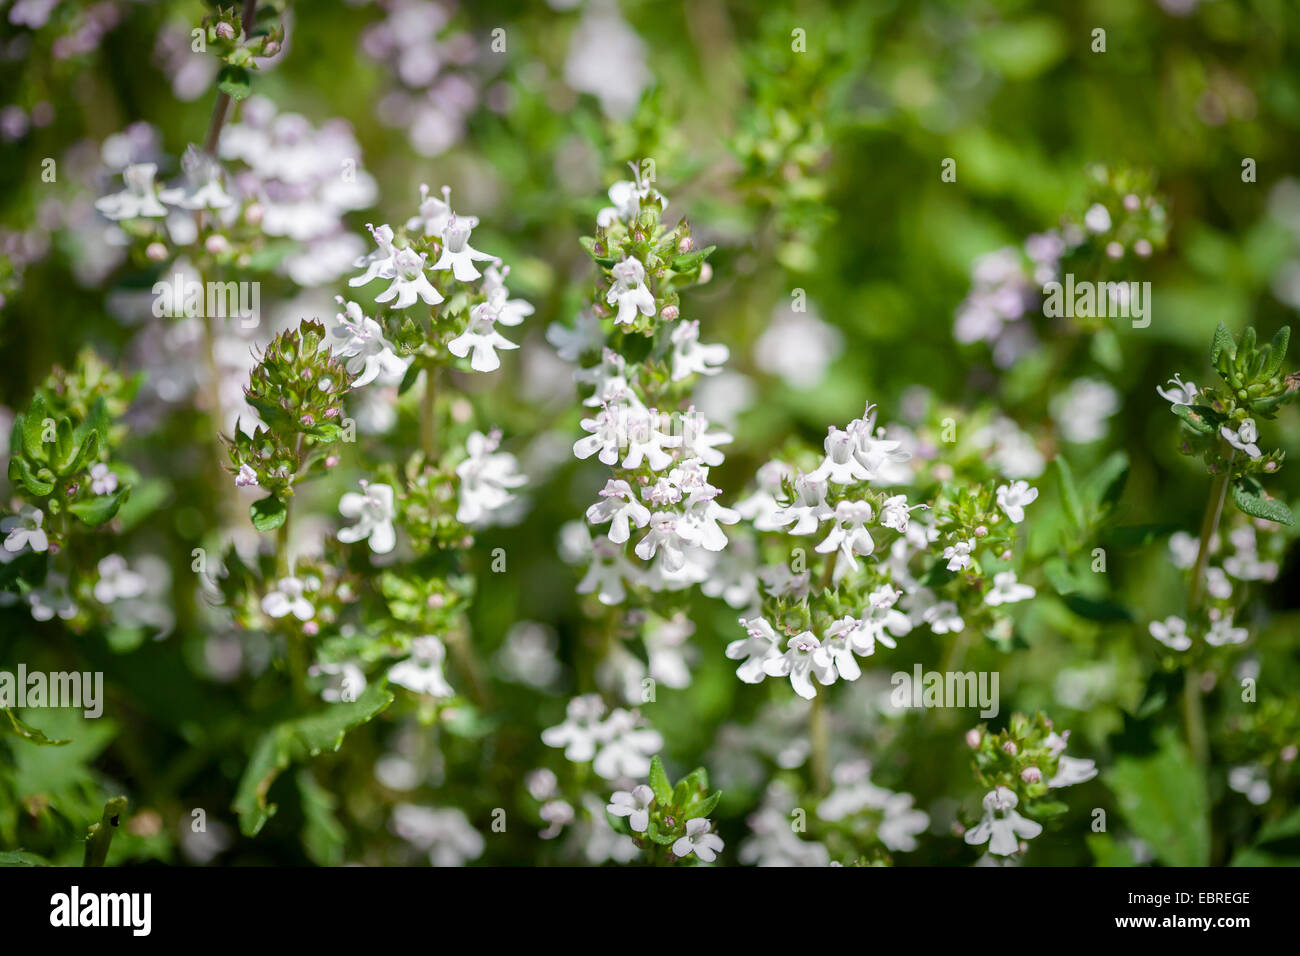 Fresh thyme herbs -thymus vulgaris - growing in garden Stock Photo